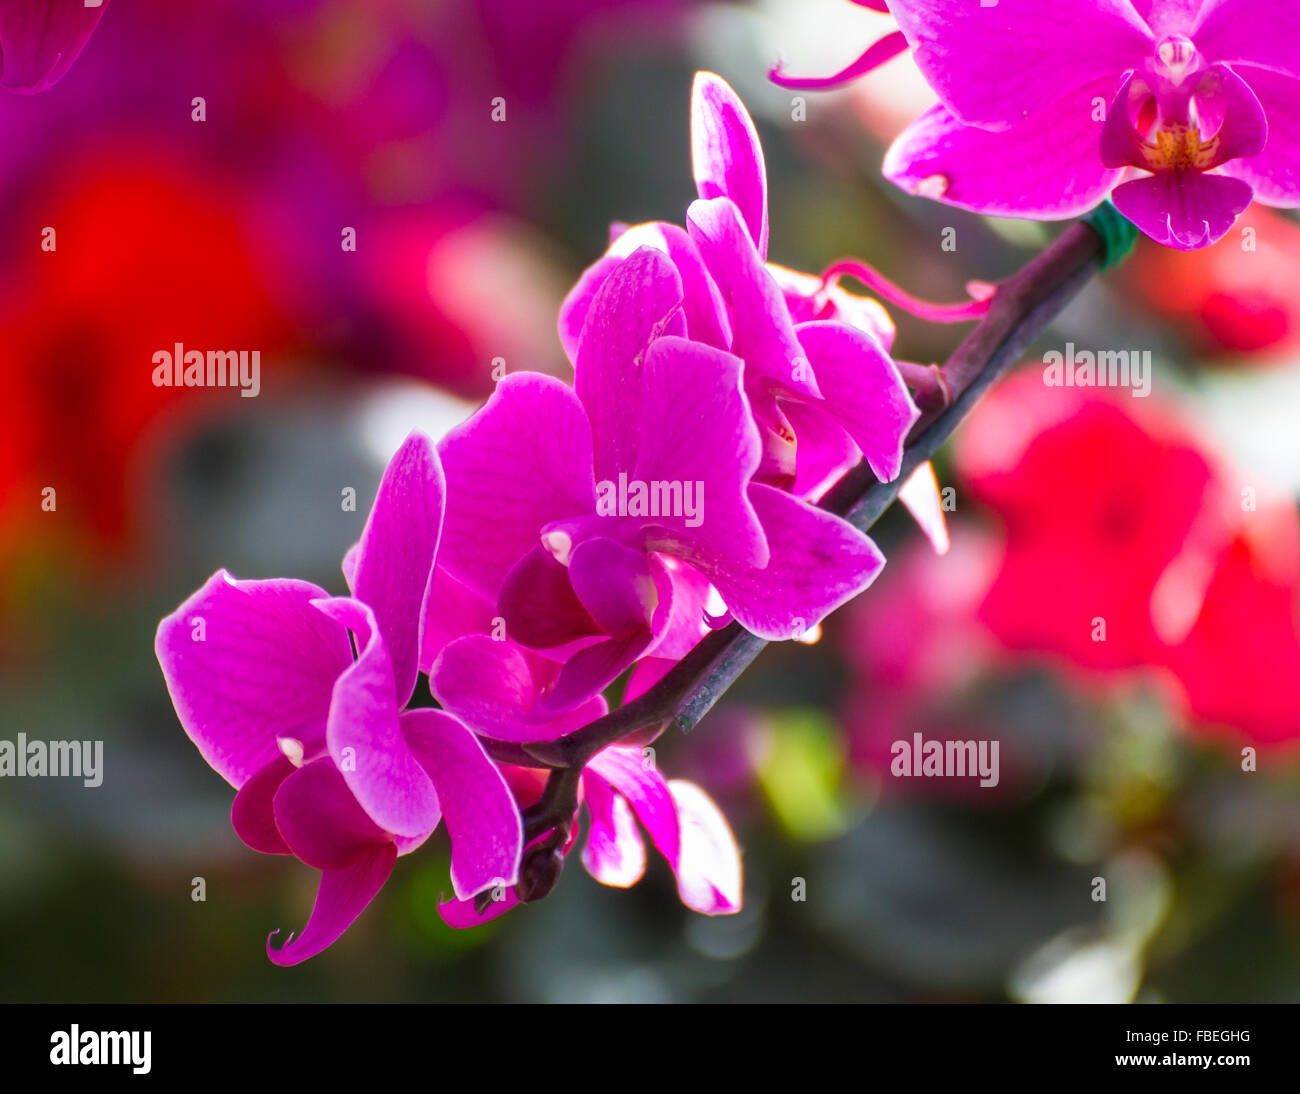 Rosa Orchideen im Garten Stockfoto